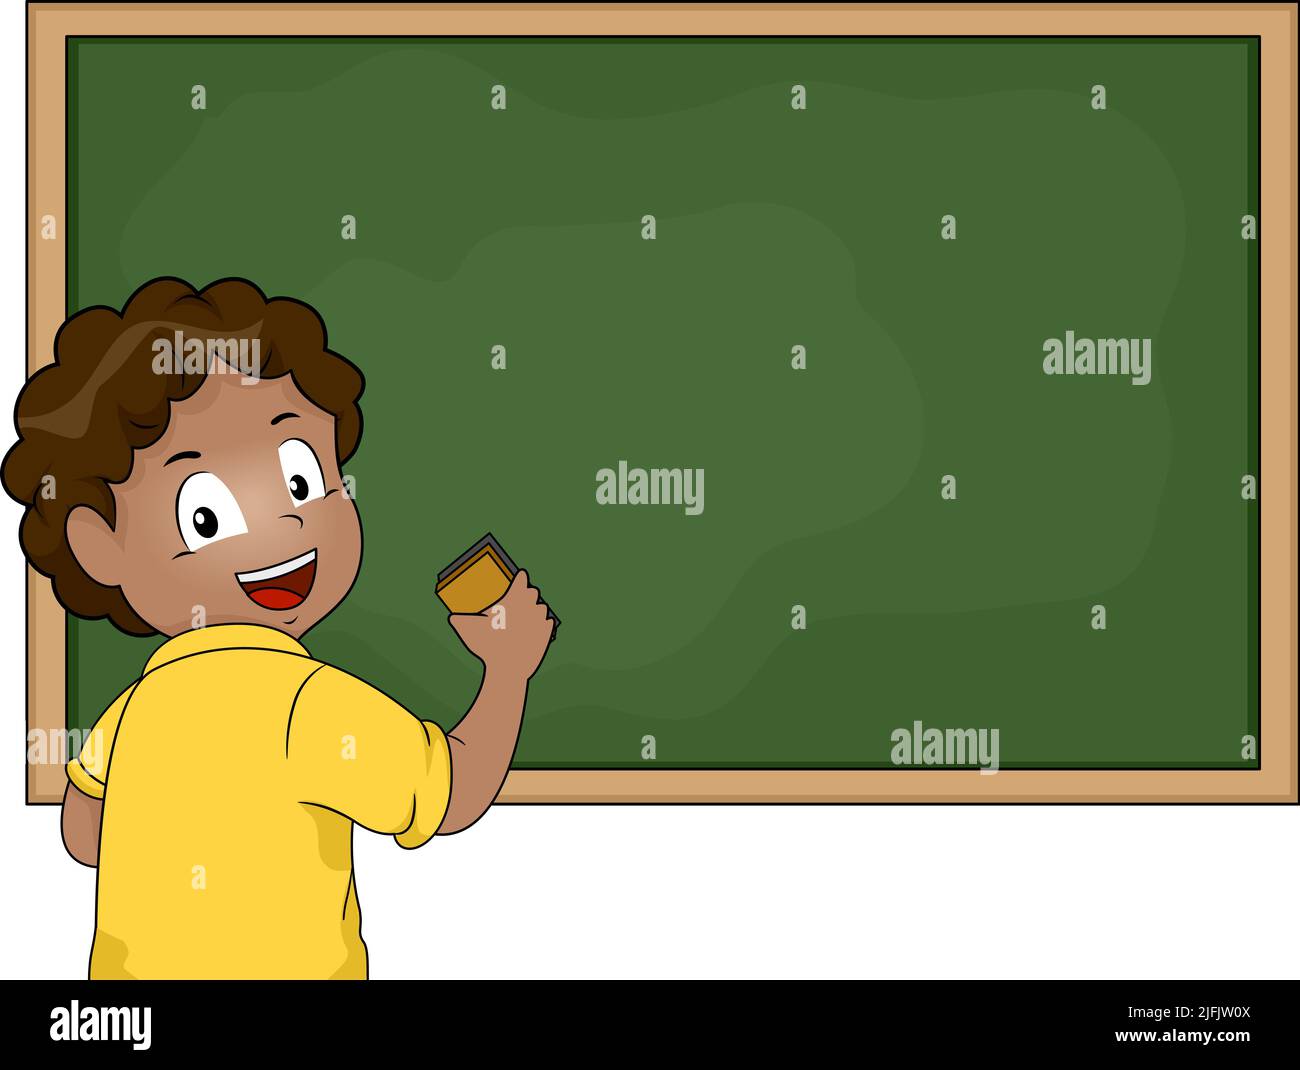 Illustration of African American Kid Boy Holding Chalkboard Eraser Cleaning the Blackboard Stock Photo